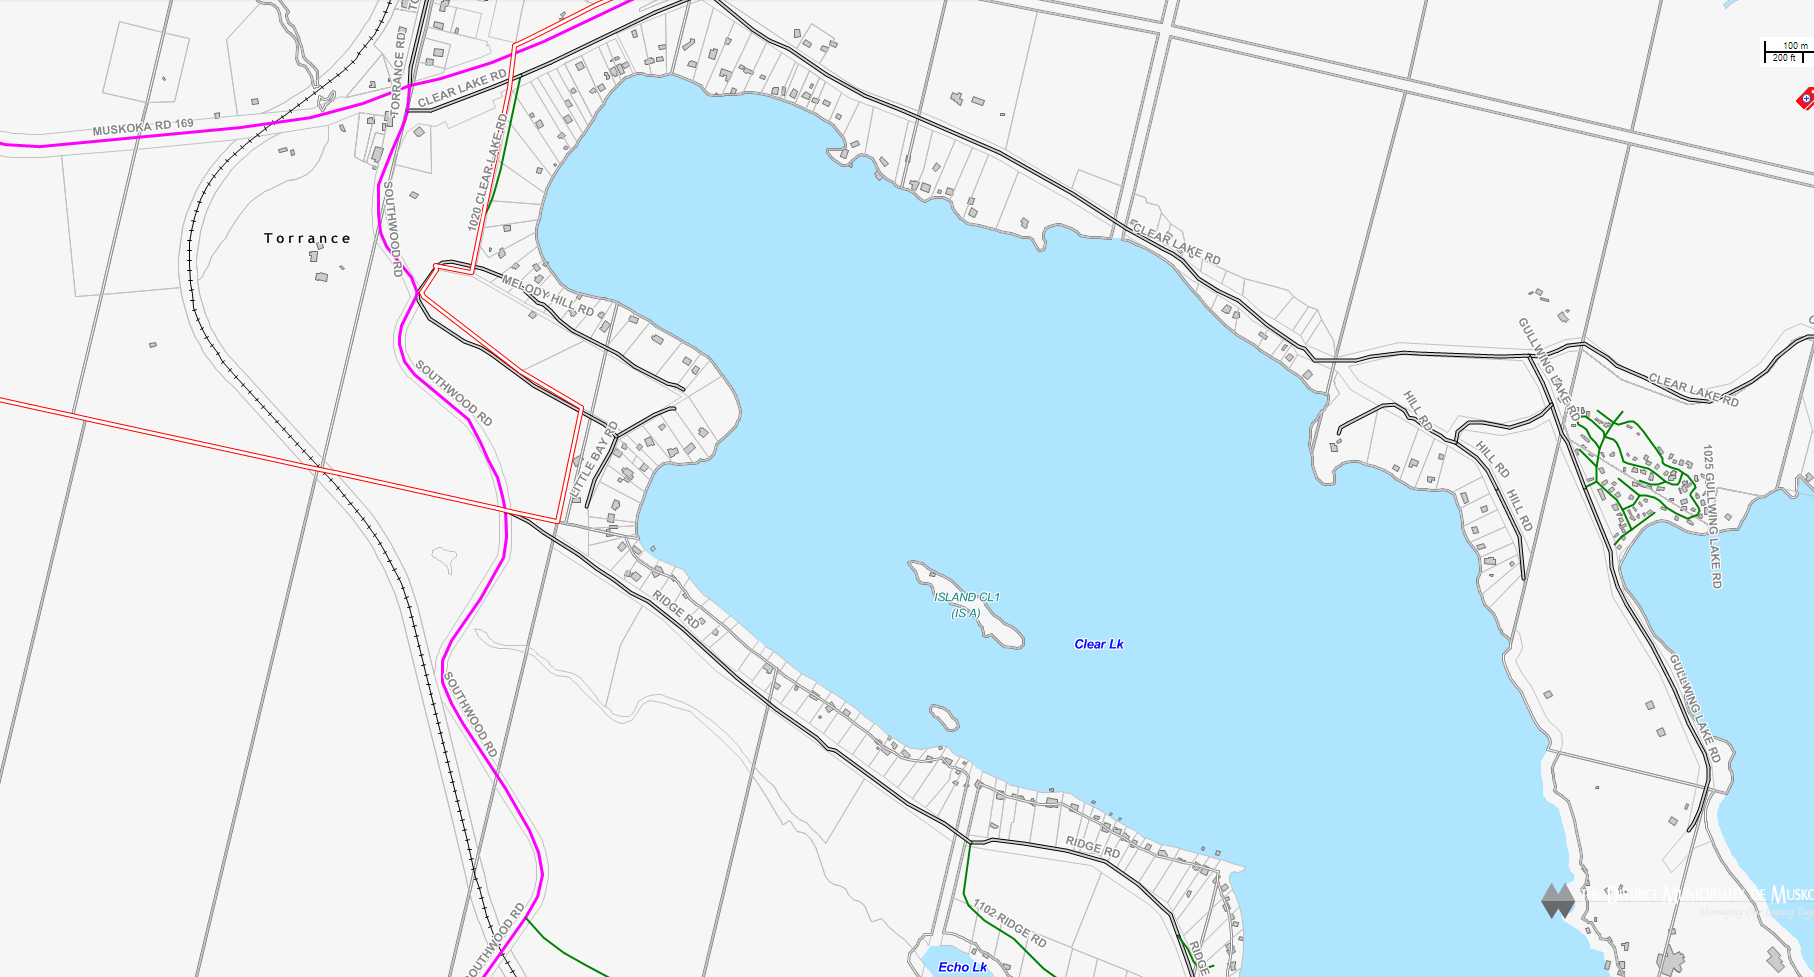 Otter Lake Cadastral Map - Otter Lake - Muskoka